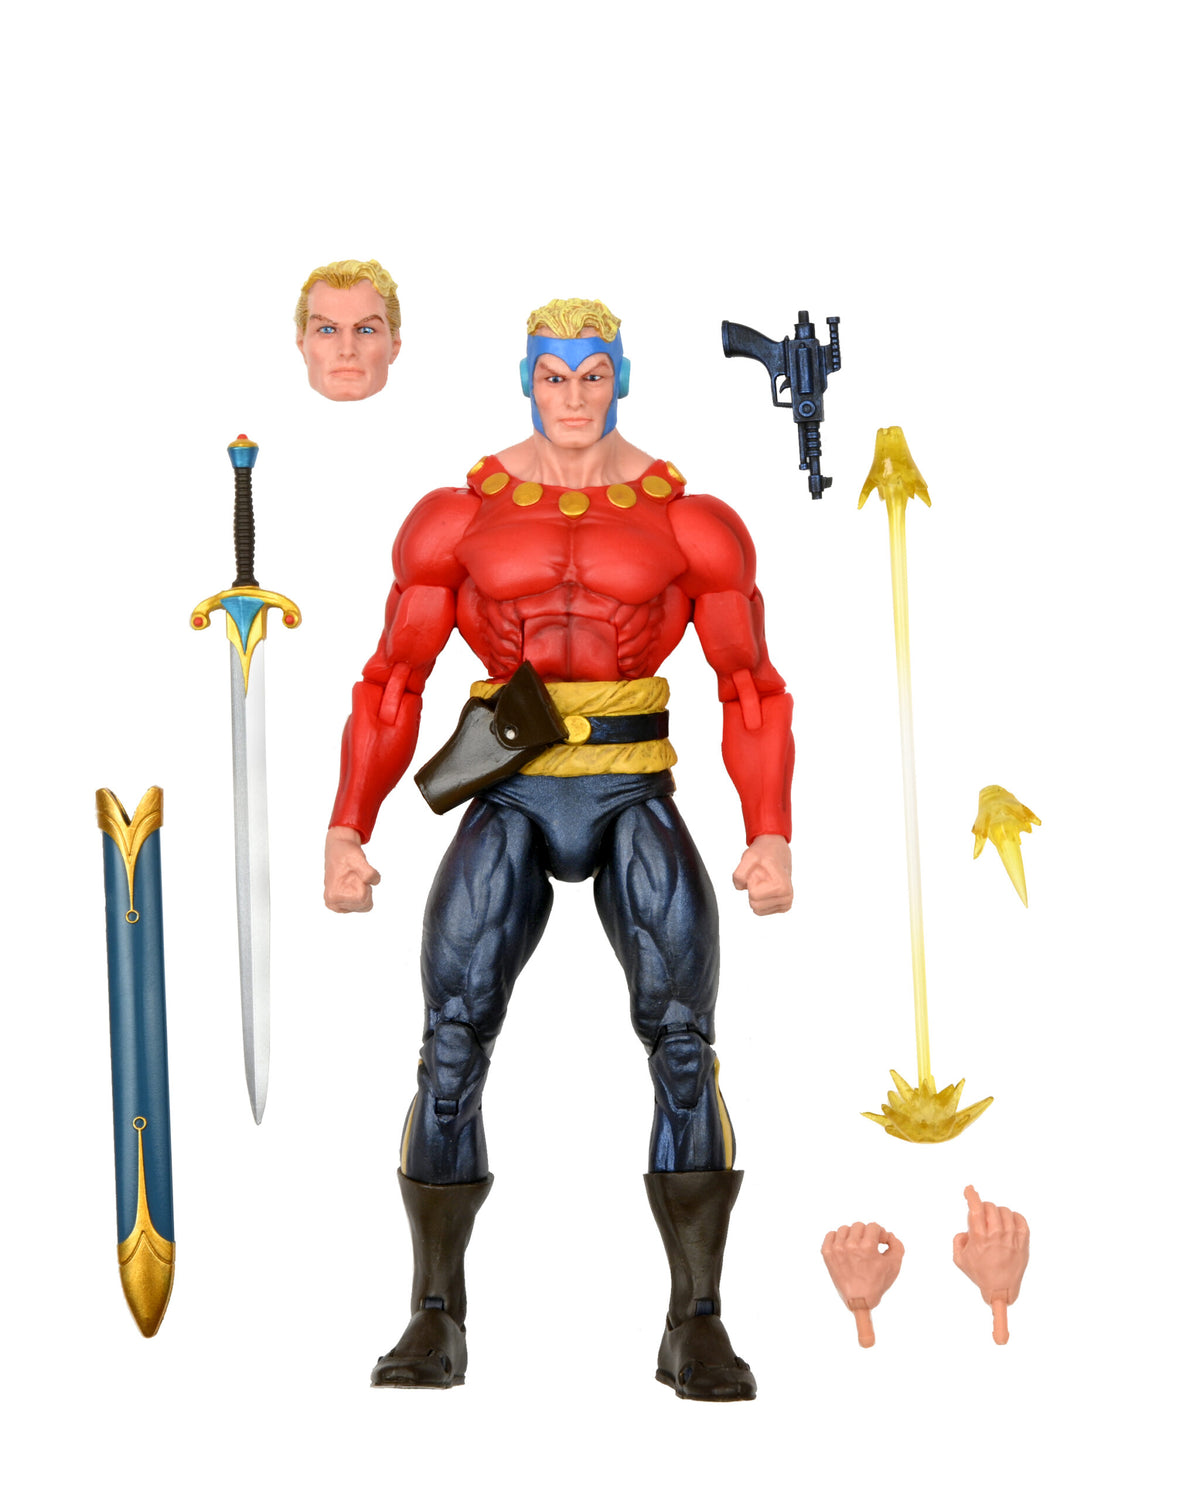 NECA - King Features The Original Superheroes - Flash Gordon 7" Action Figure